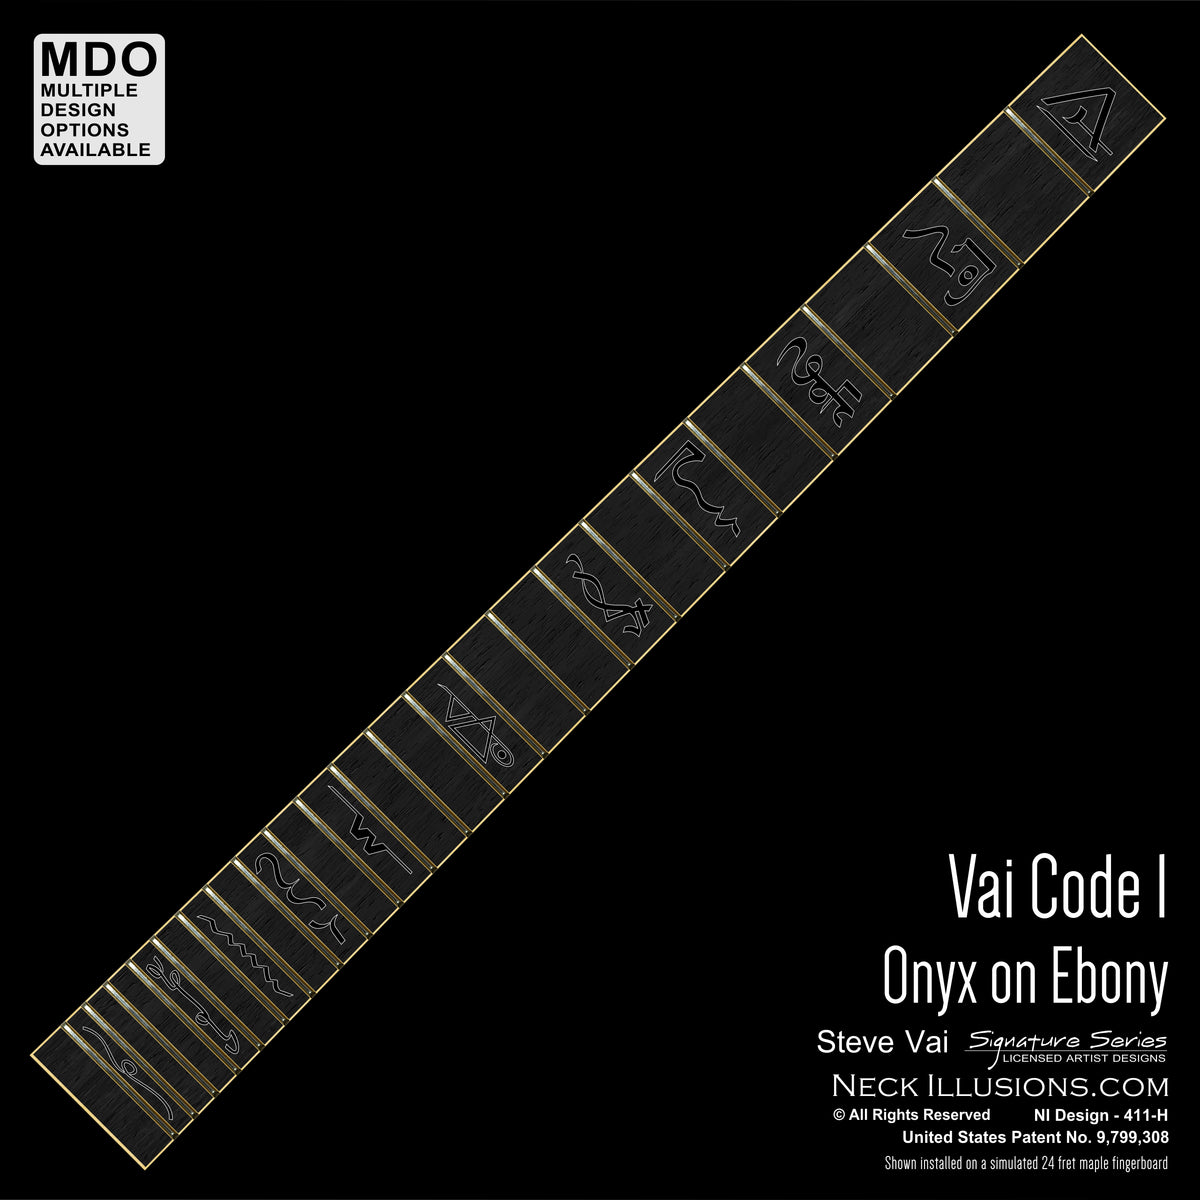 Steve Vai - Vai Code 1